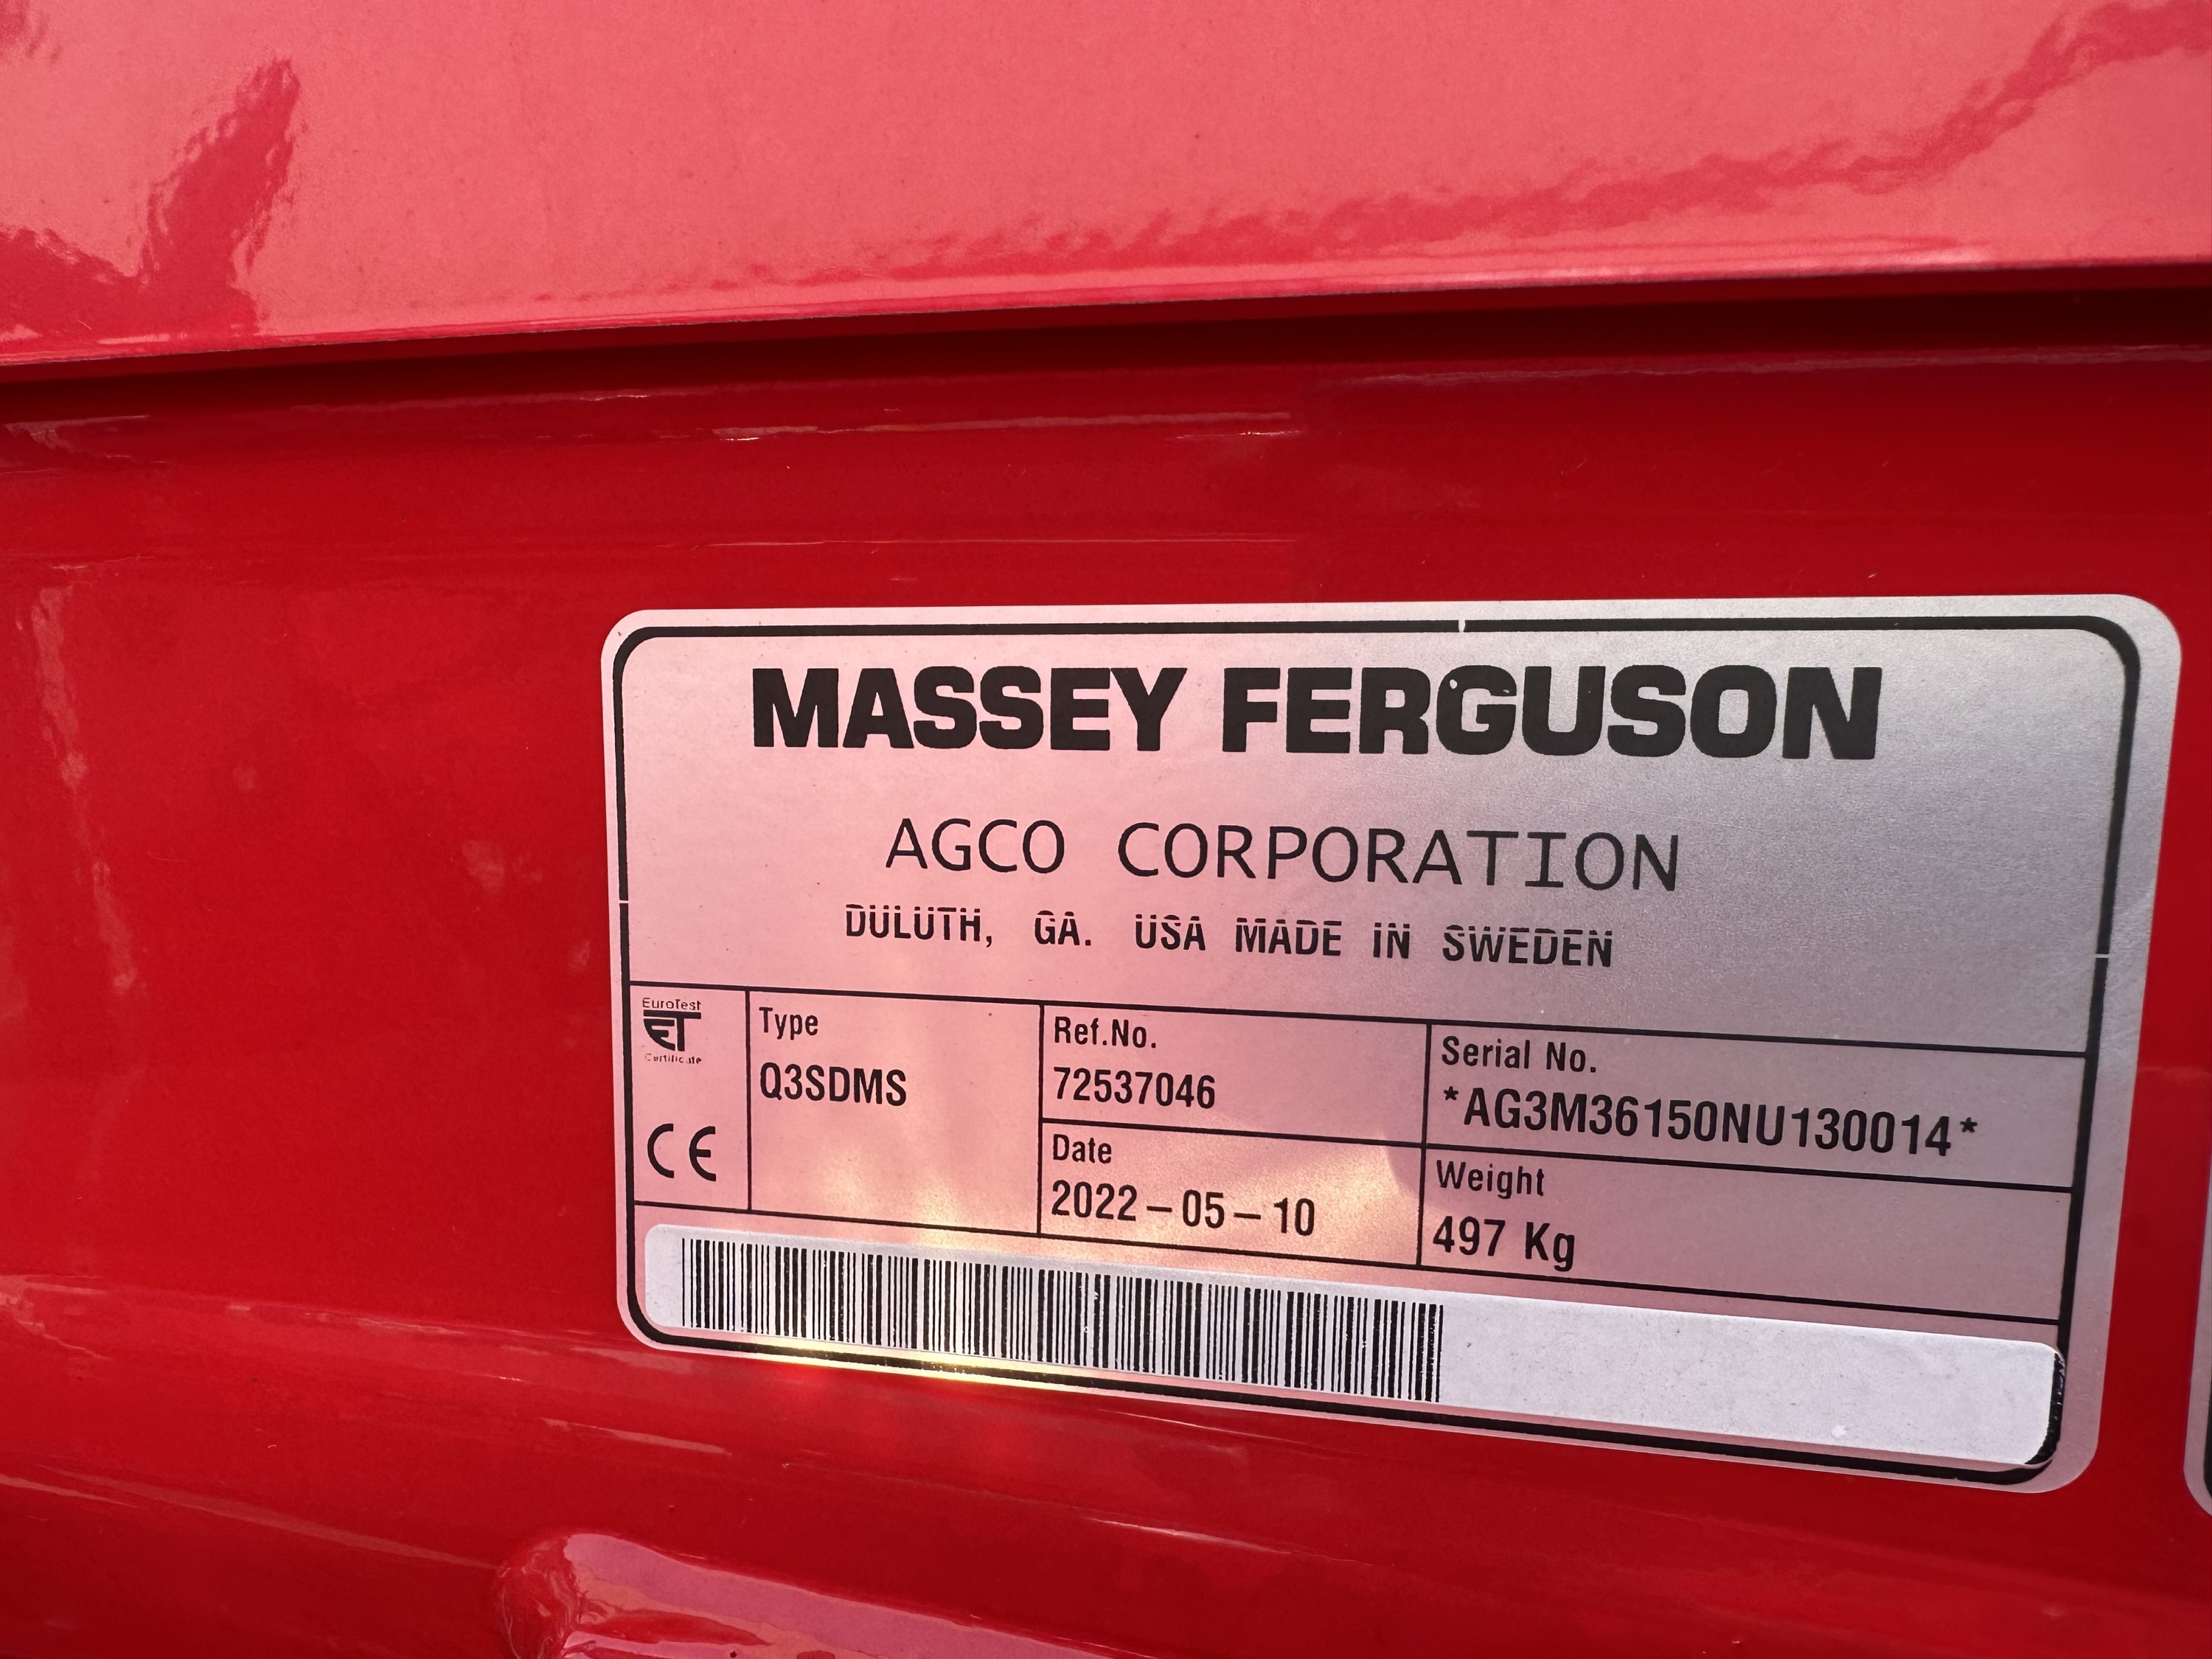 2022 Massey Ferguson 4707 Tractor